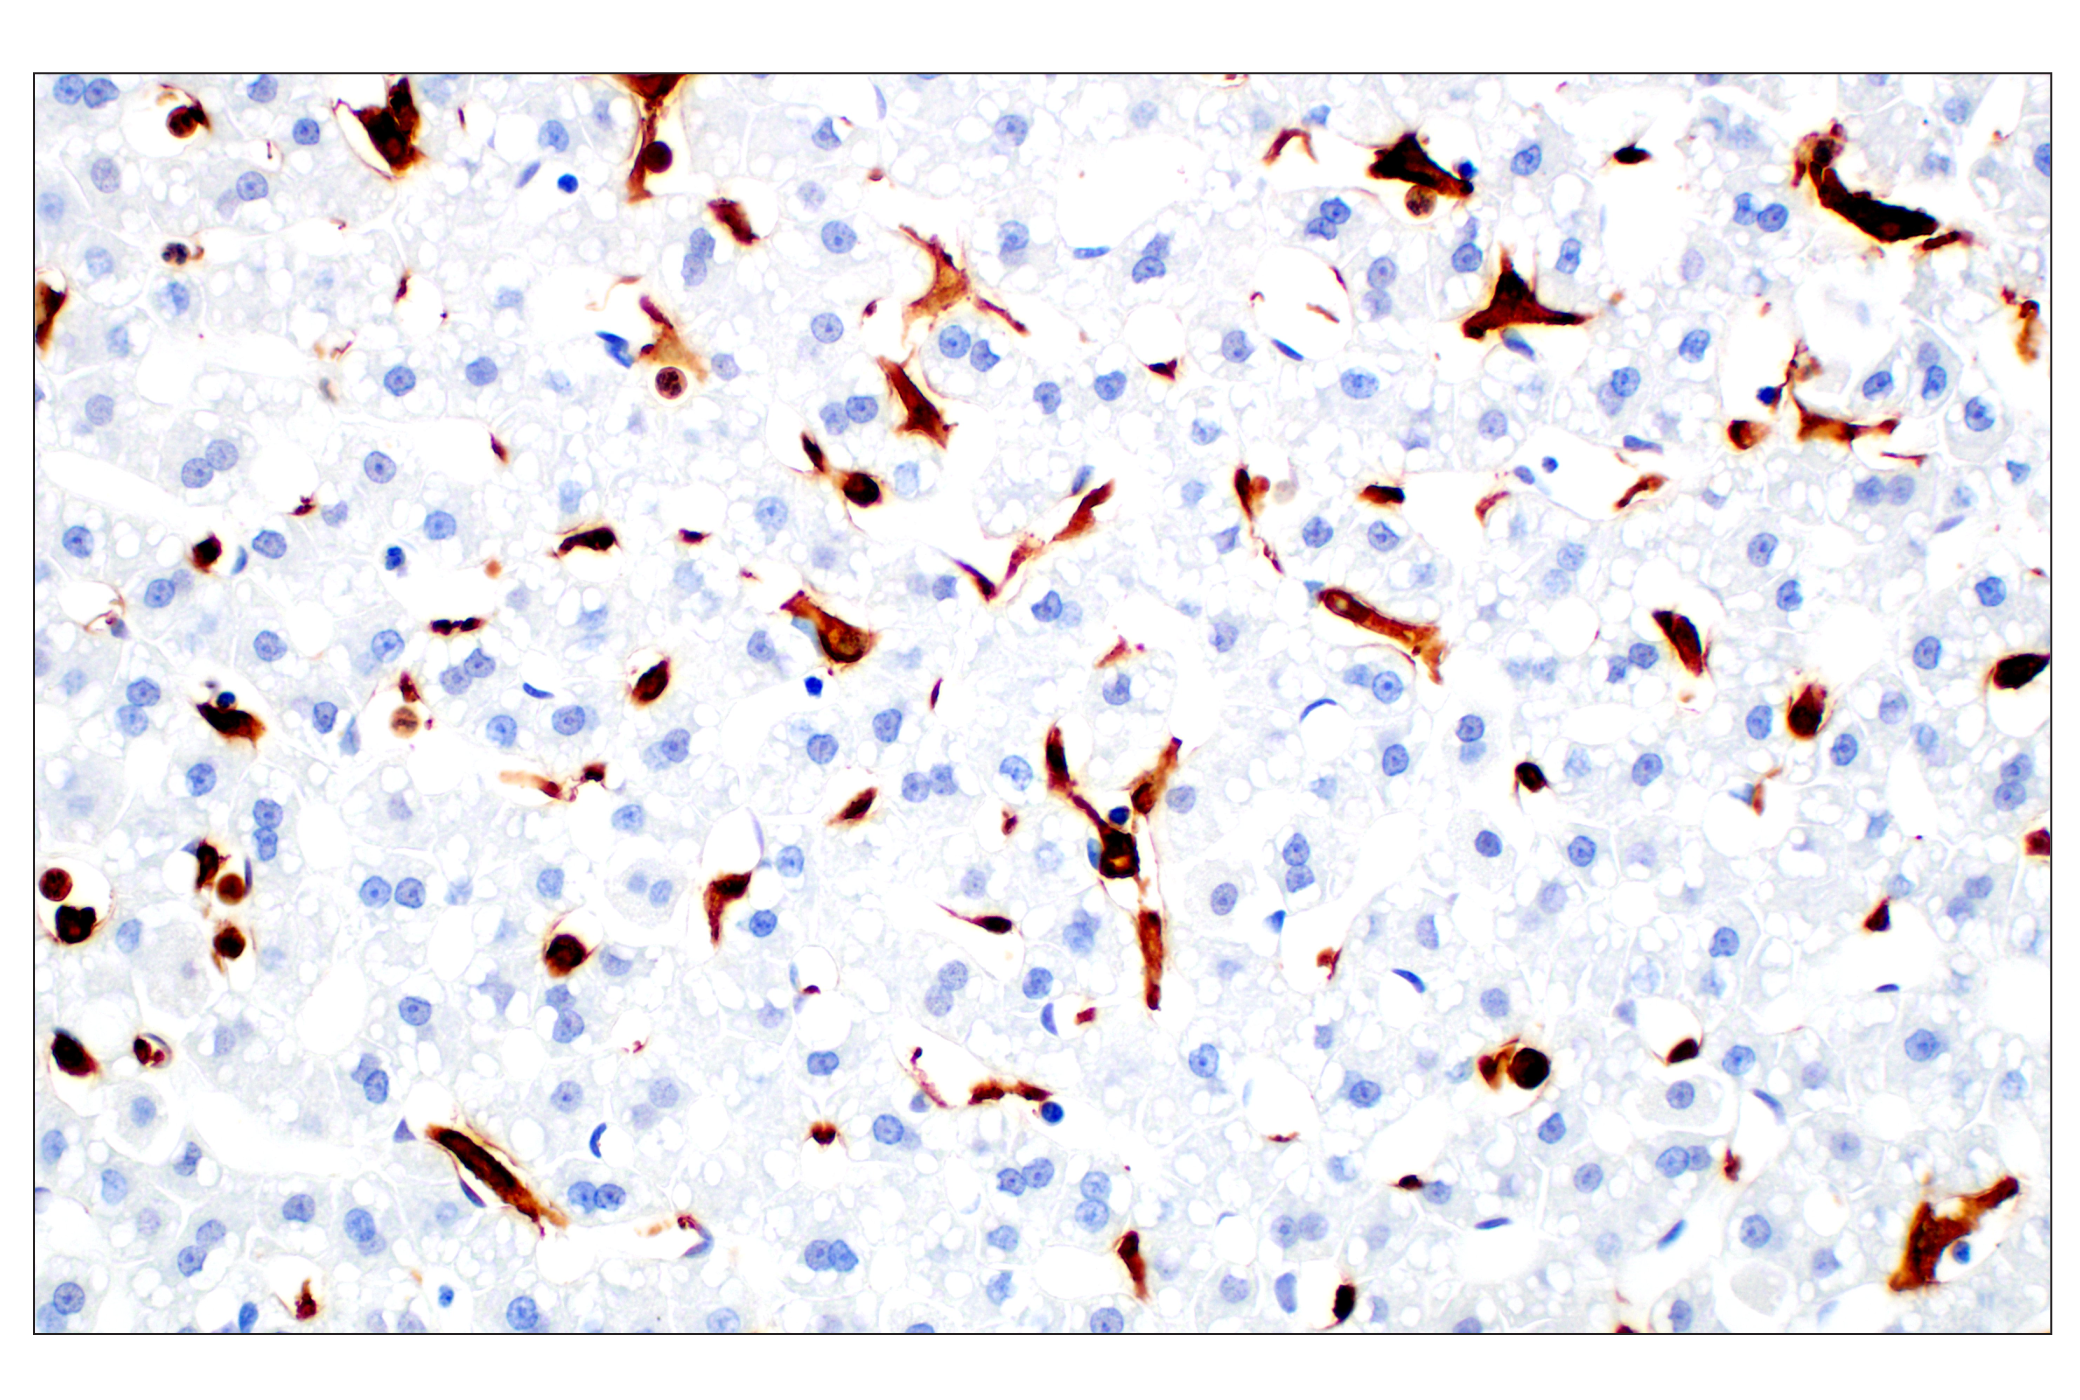  Image 56: Mouse Microglia Marker IF Antibody Sampler Kit